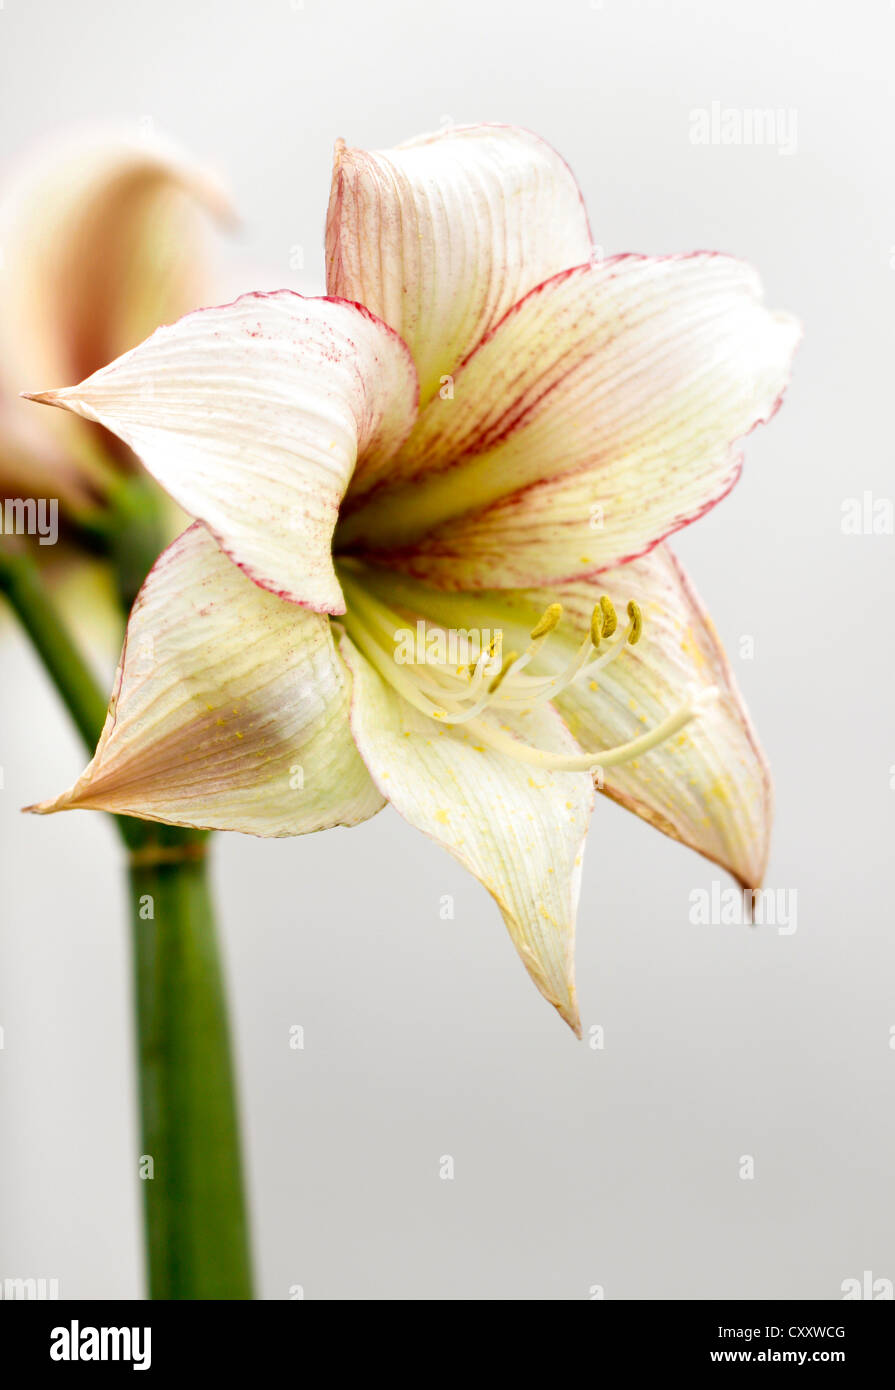 Blossom of a belladonna lily, Saint Joseph lily (Amaryllis sp.) Stock Photo